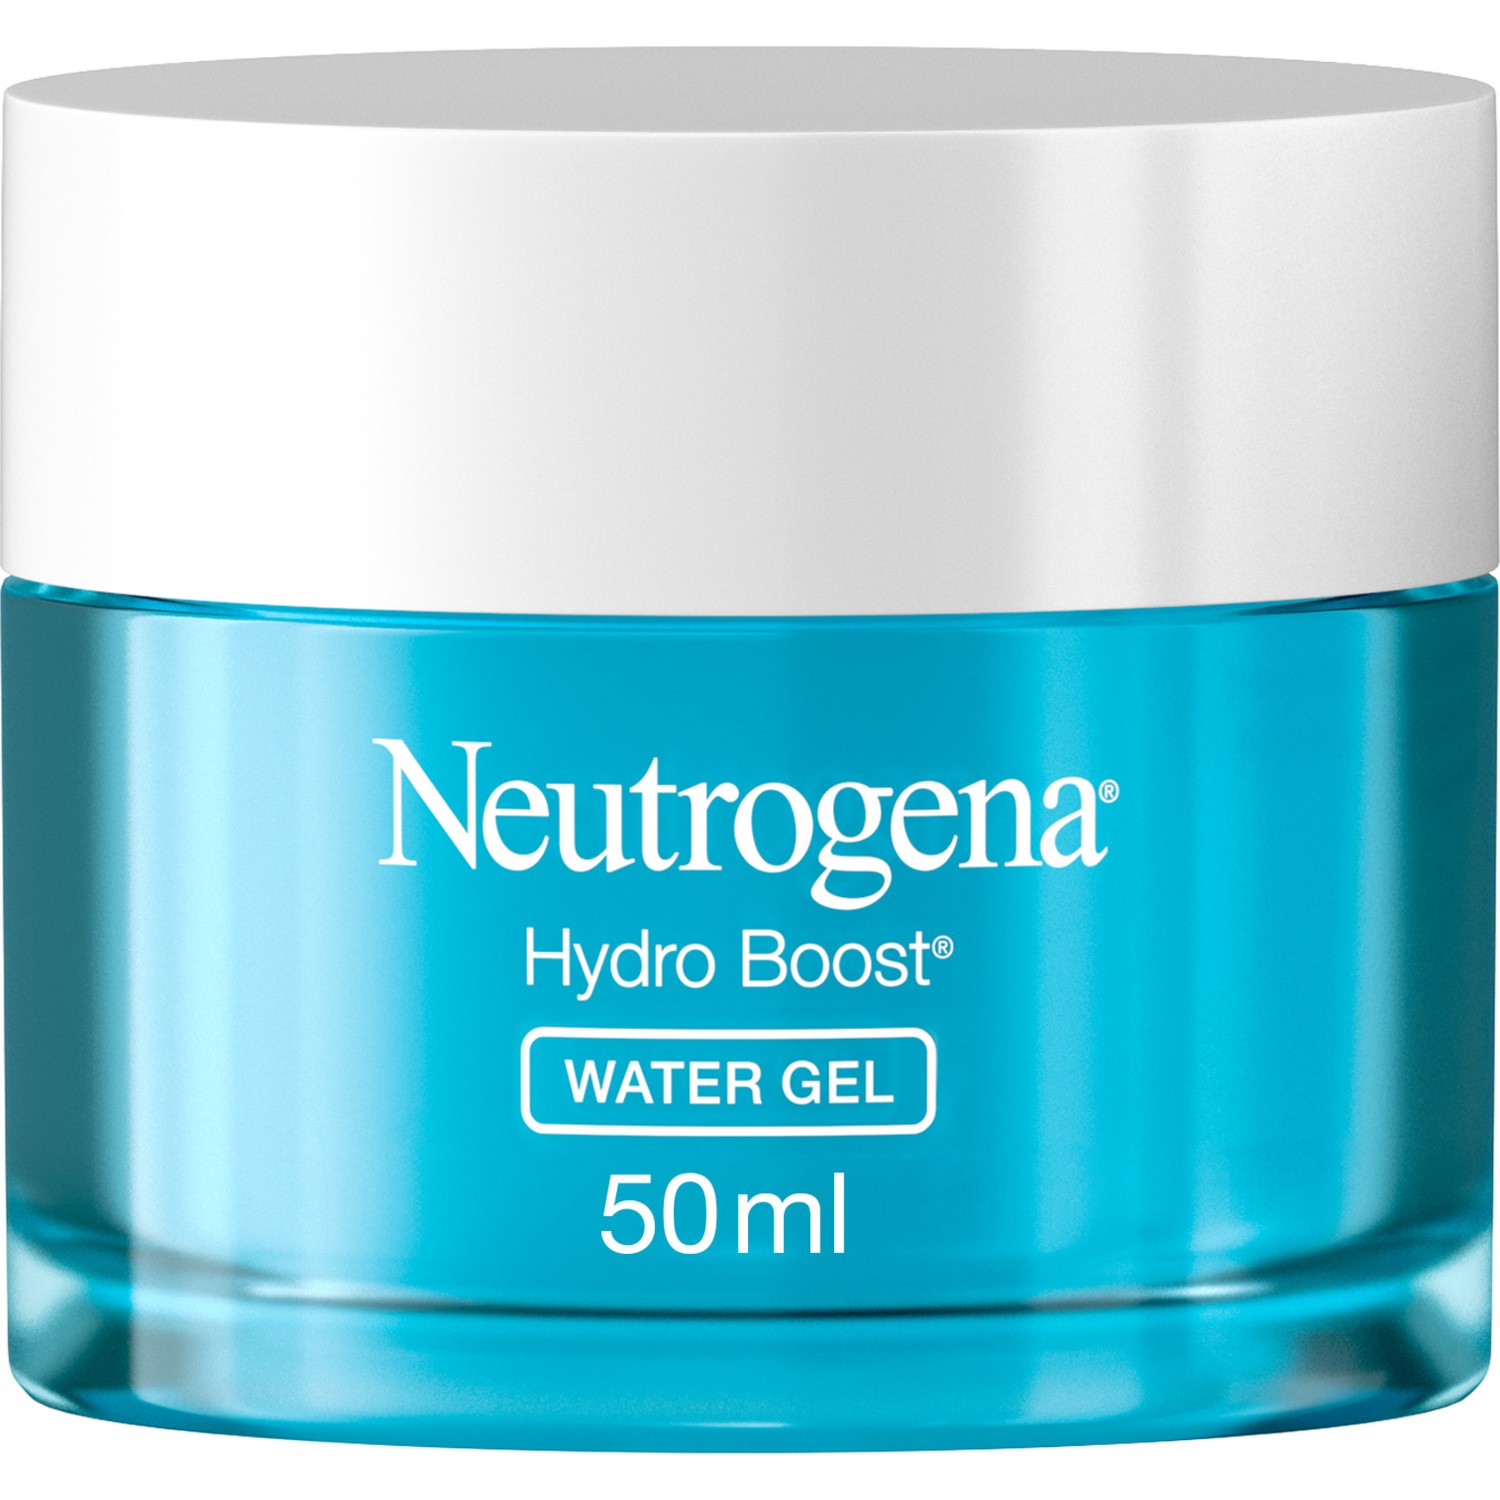 Крем увлажняющий Neutrogena Hydro Boost Water Gel для нормальной кожи крем увлажняющий neutrogena hydro boost water gel для нормальной кожи 50 мл